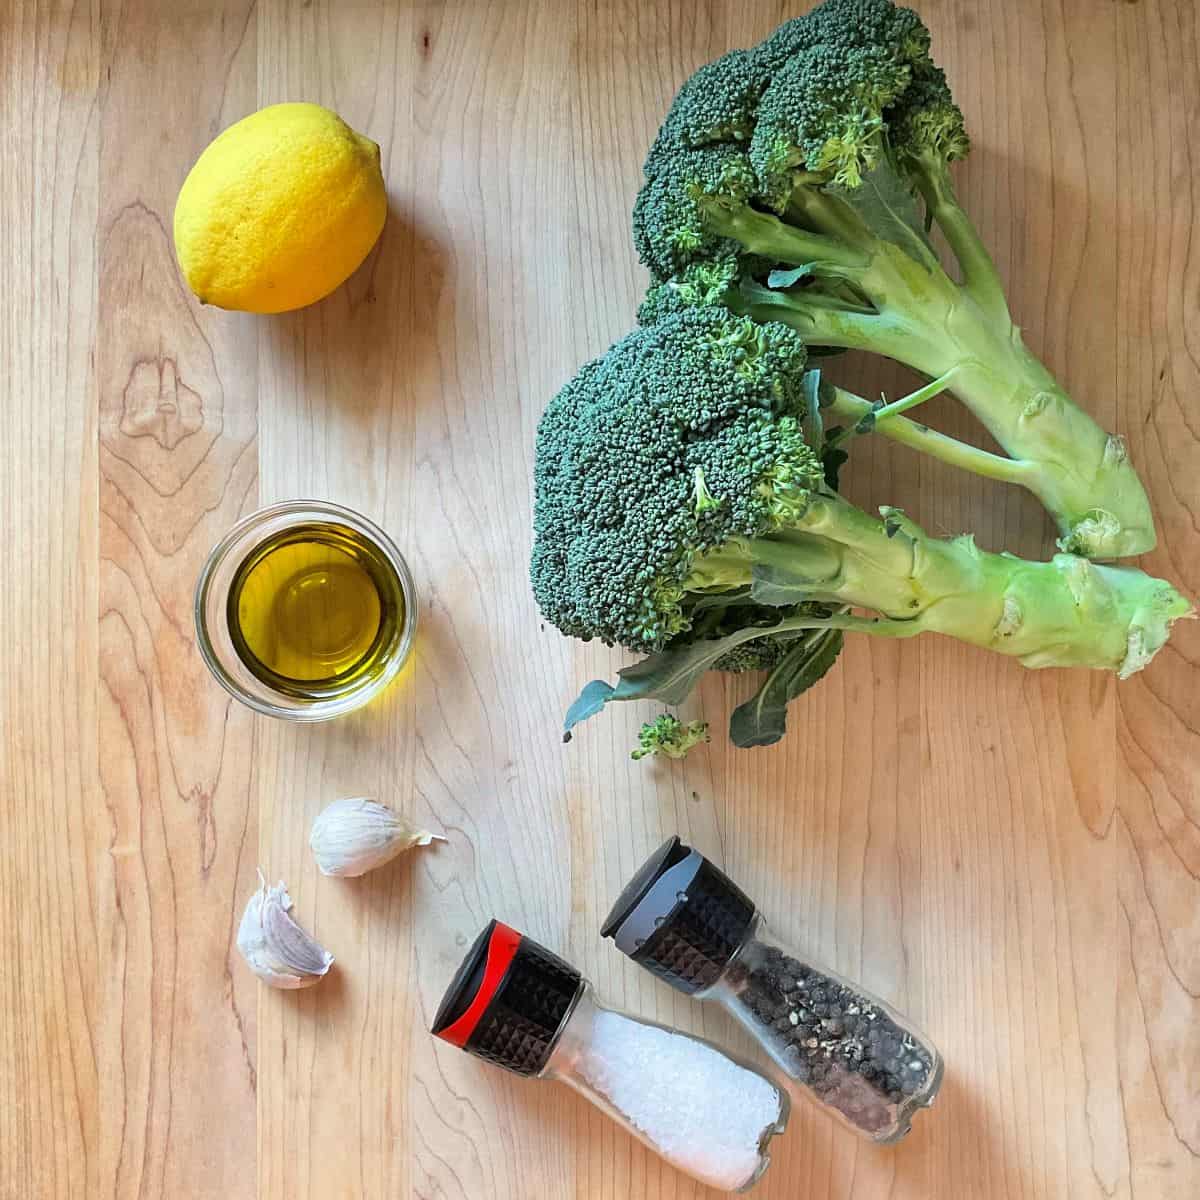 Ingredients to make crispy broccoli.